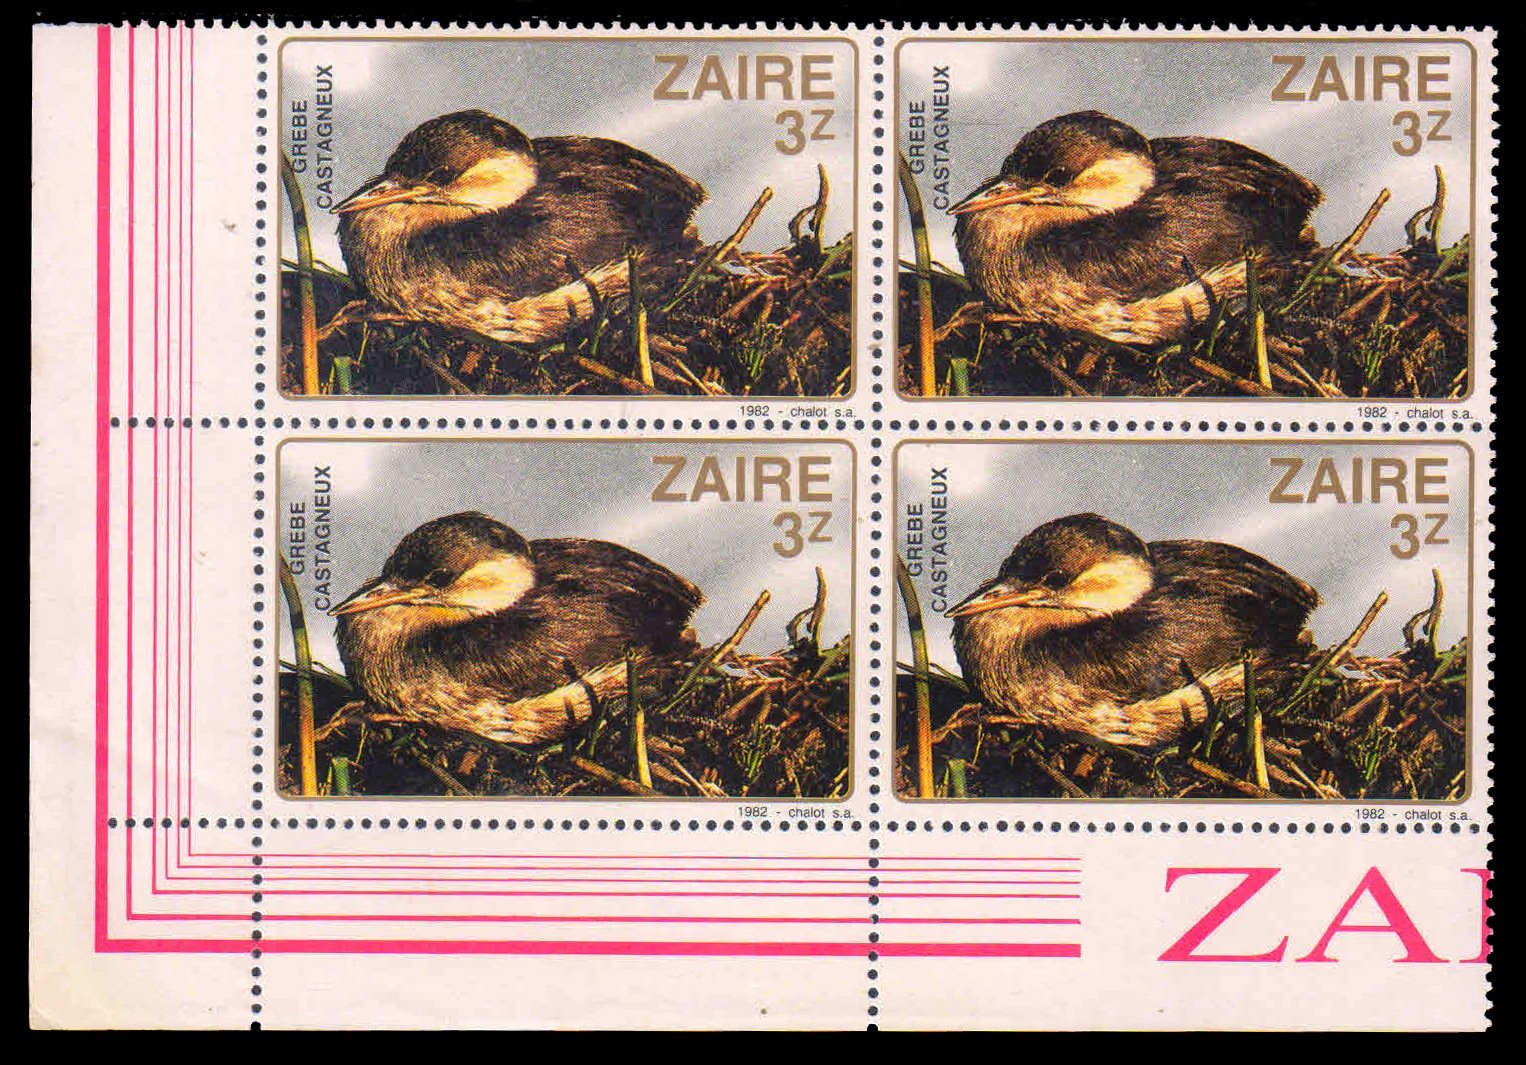 ZAIRE 1982 - Bird. Little Grebe. Corner Block of 4, MNH. S.G. 1139